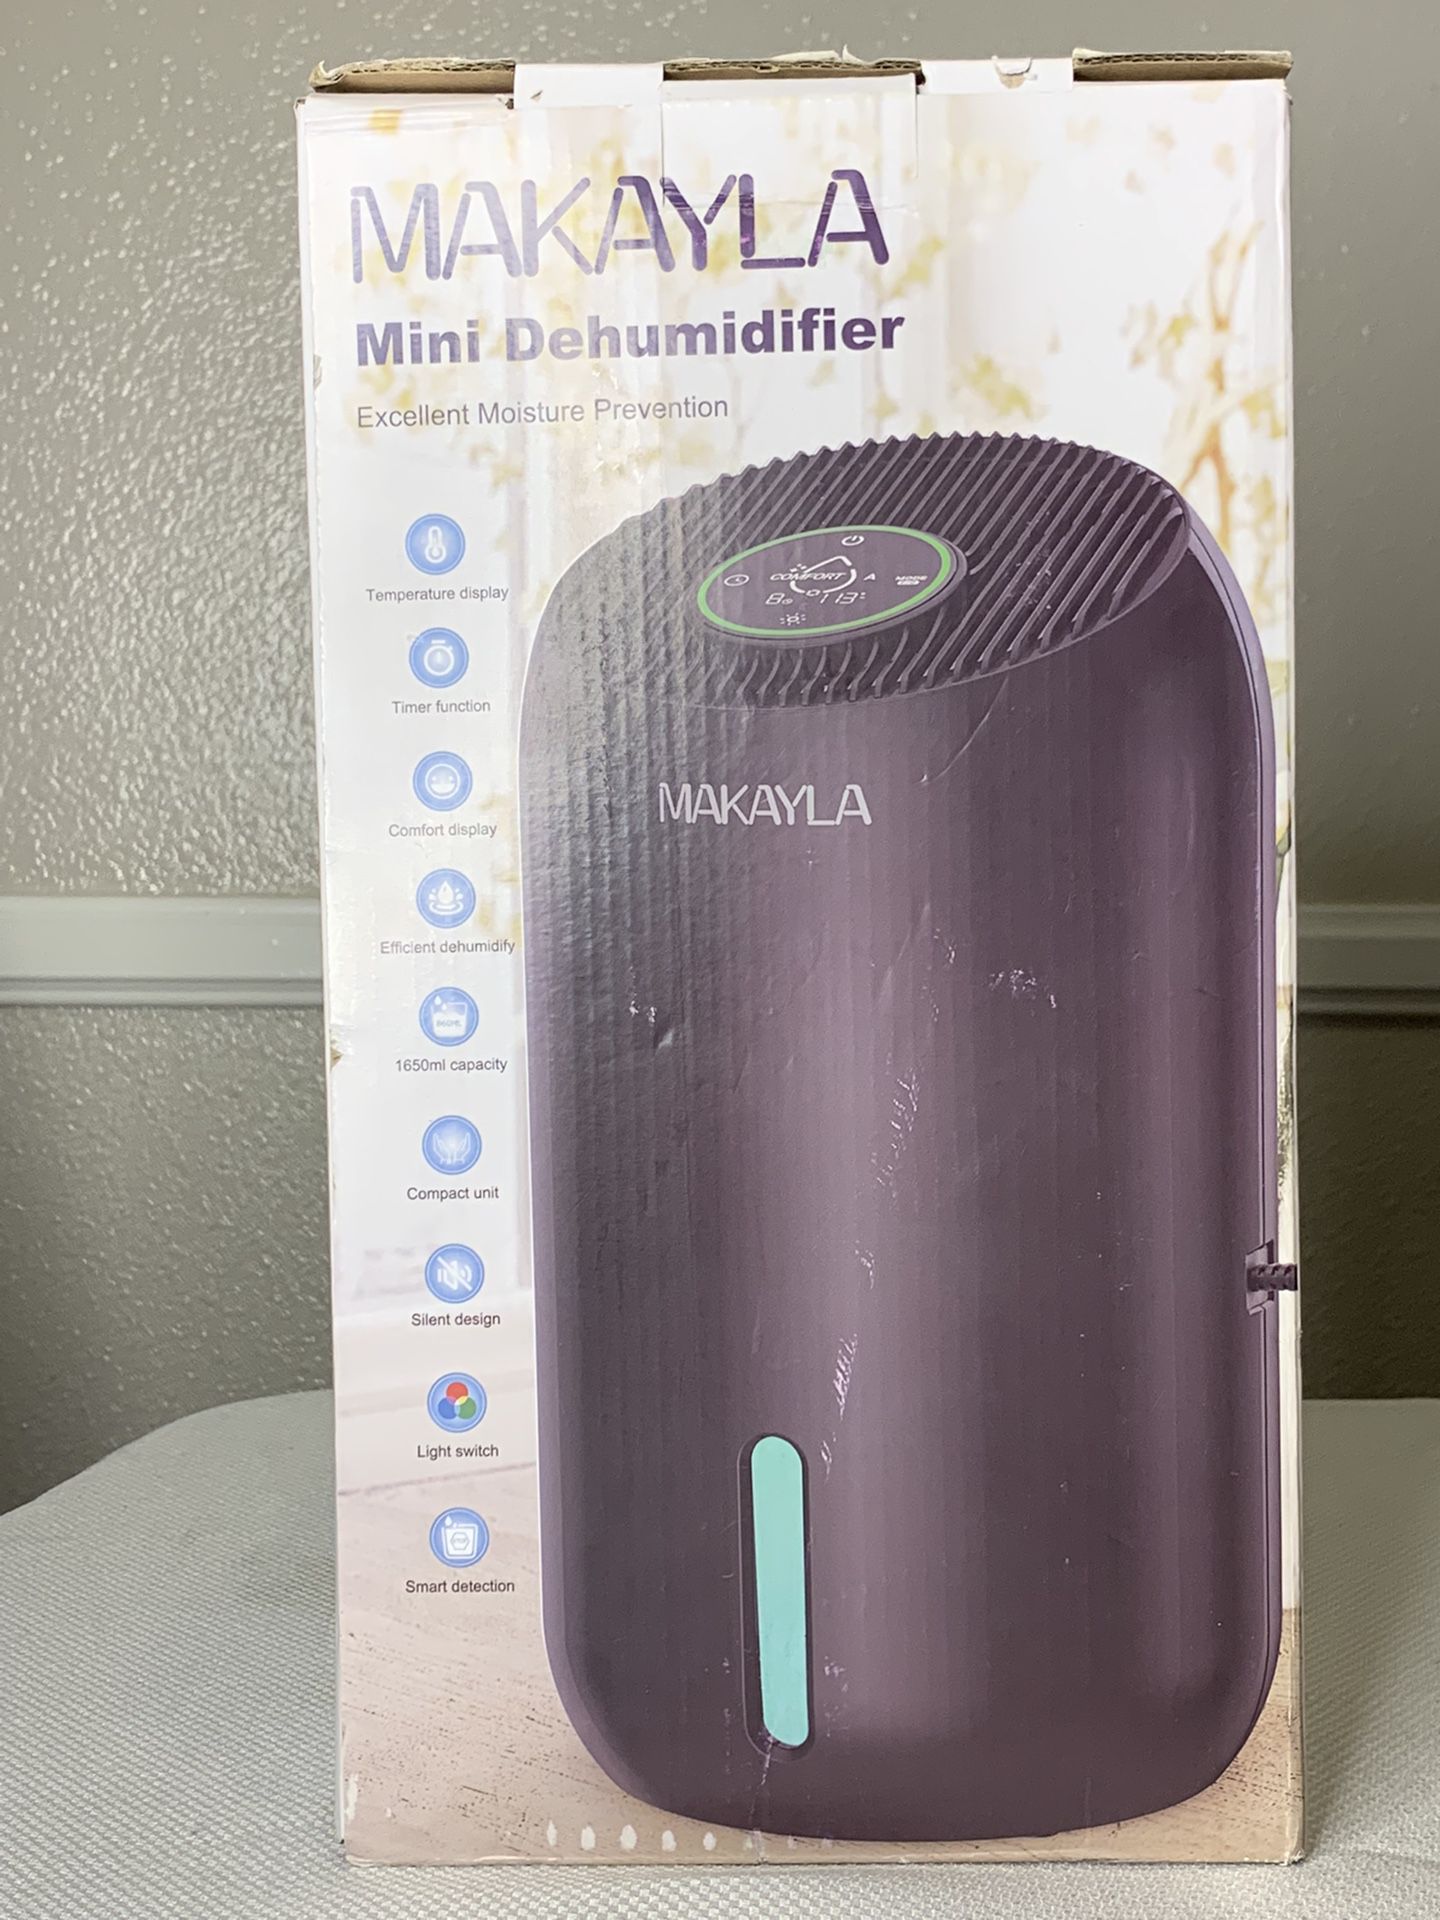 Makayla Mini Dehumidifier